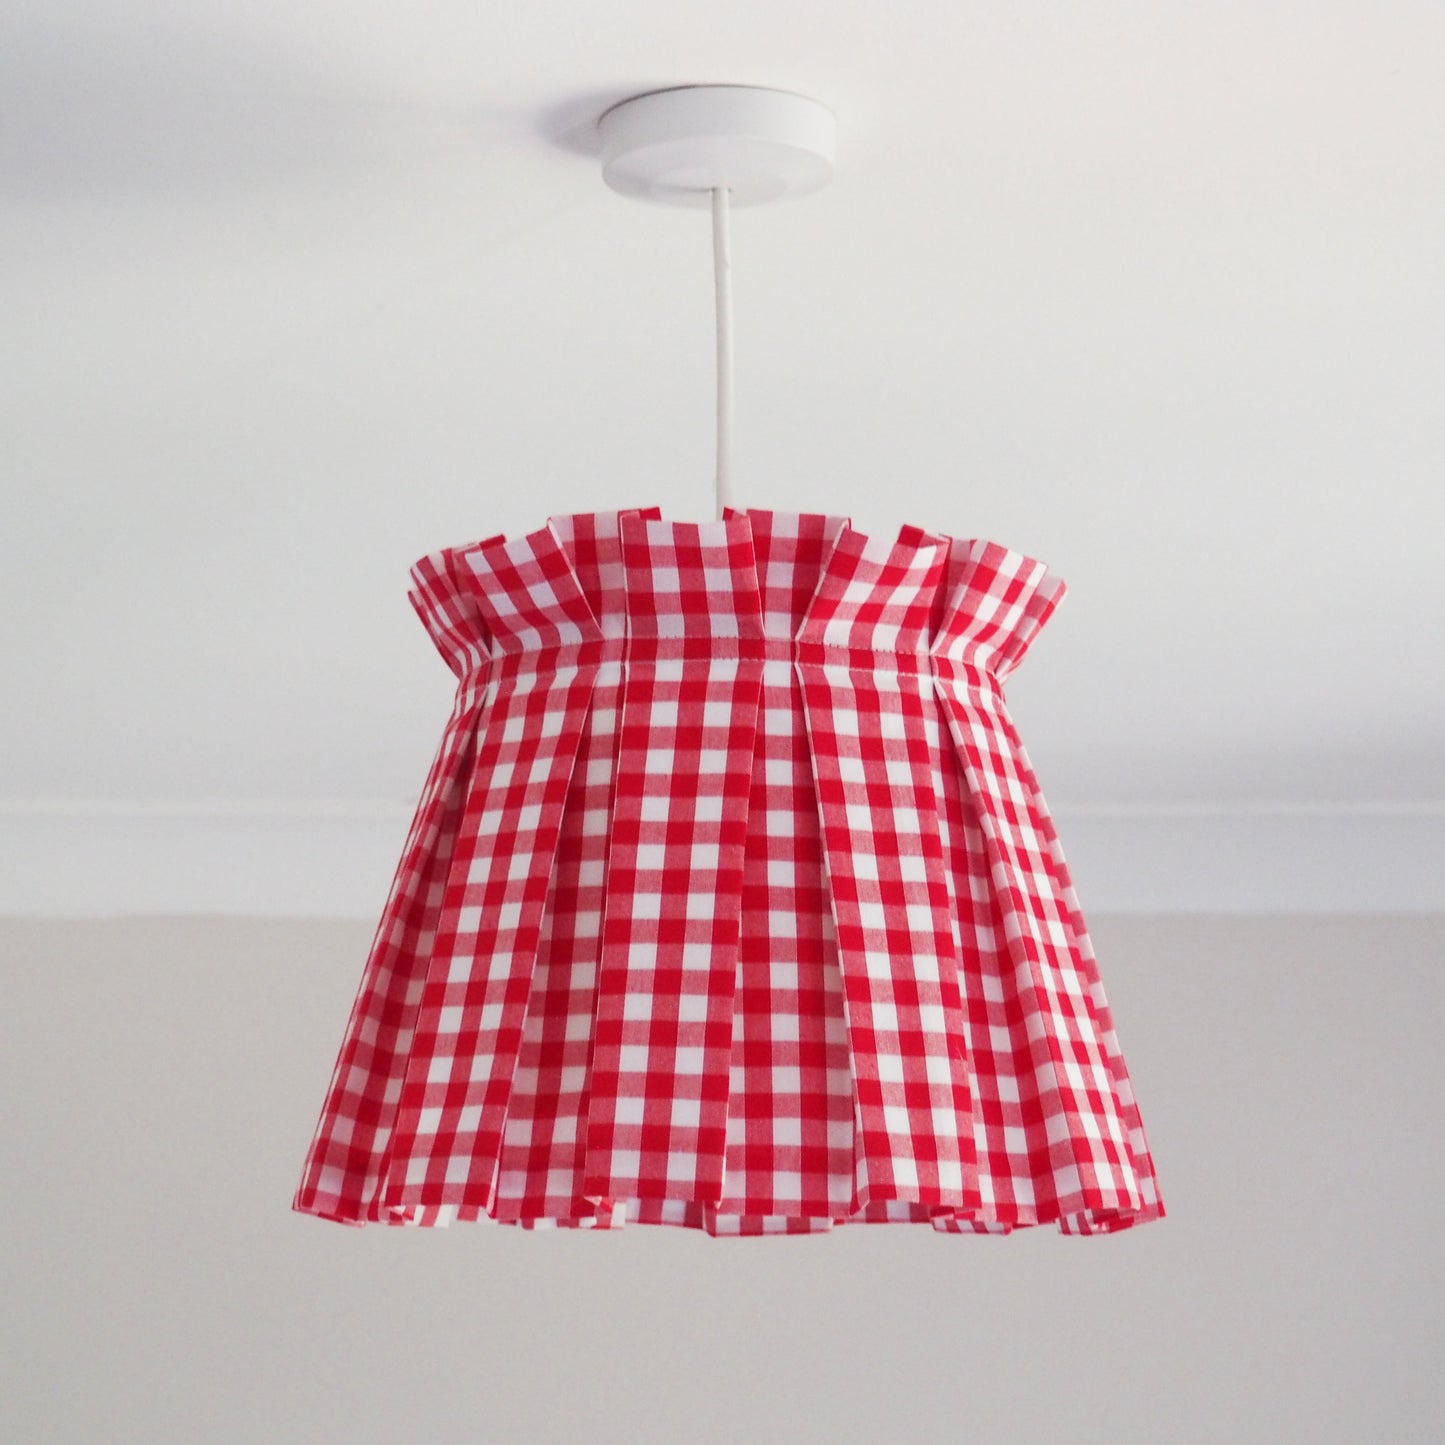 MEDIUM box pleat red gingham fabric lampshade